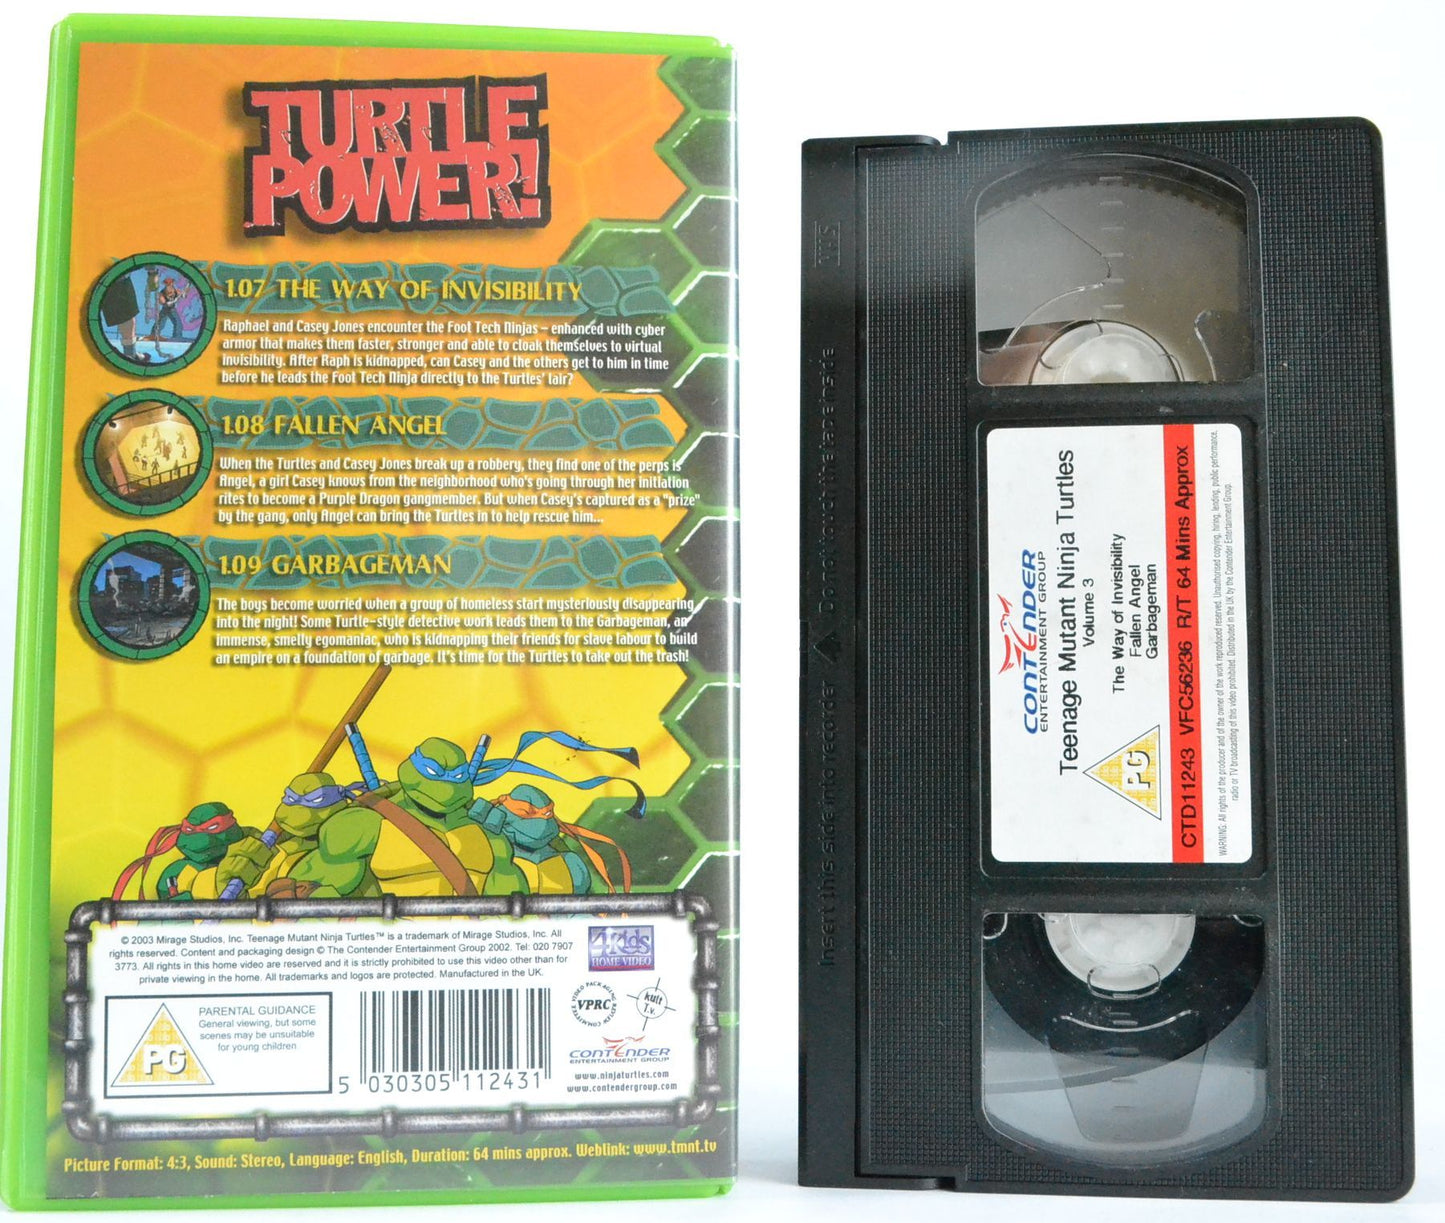 Teenage Mutant “Ninja” Turtles [Animation] Way Of Invisibility - Kid’s PG - VHS-